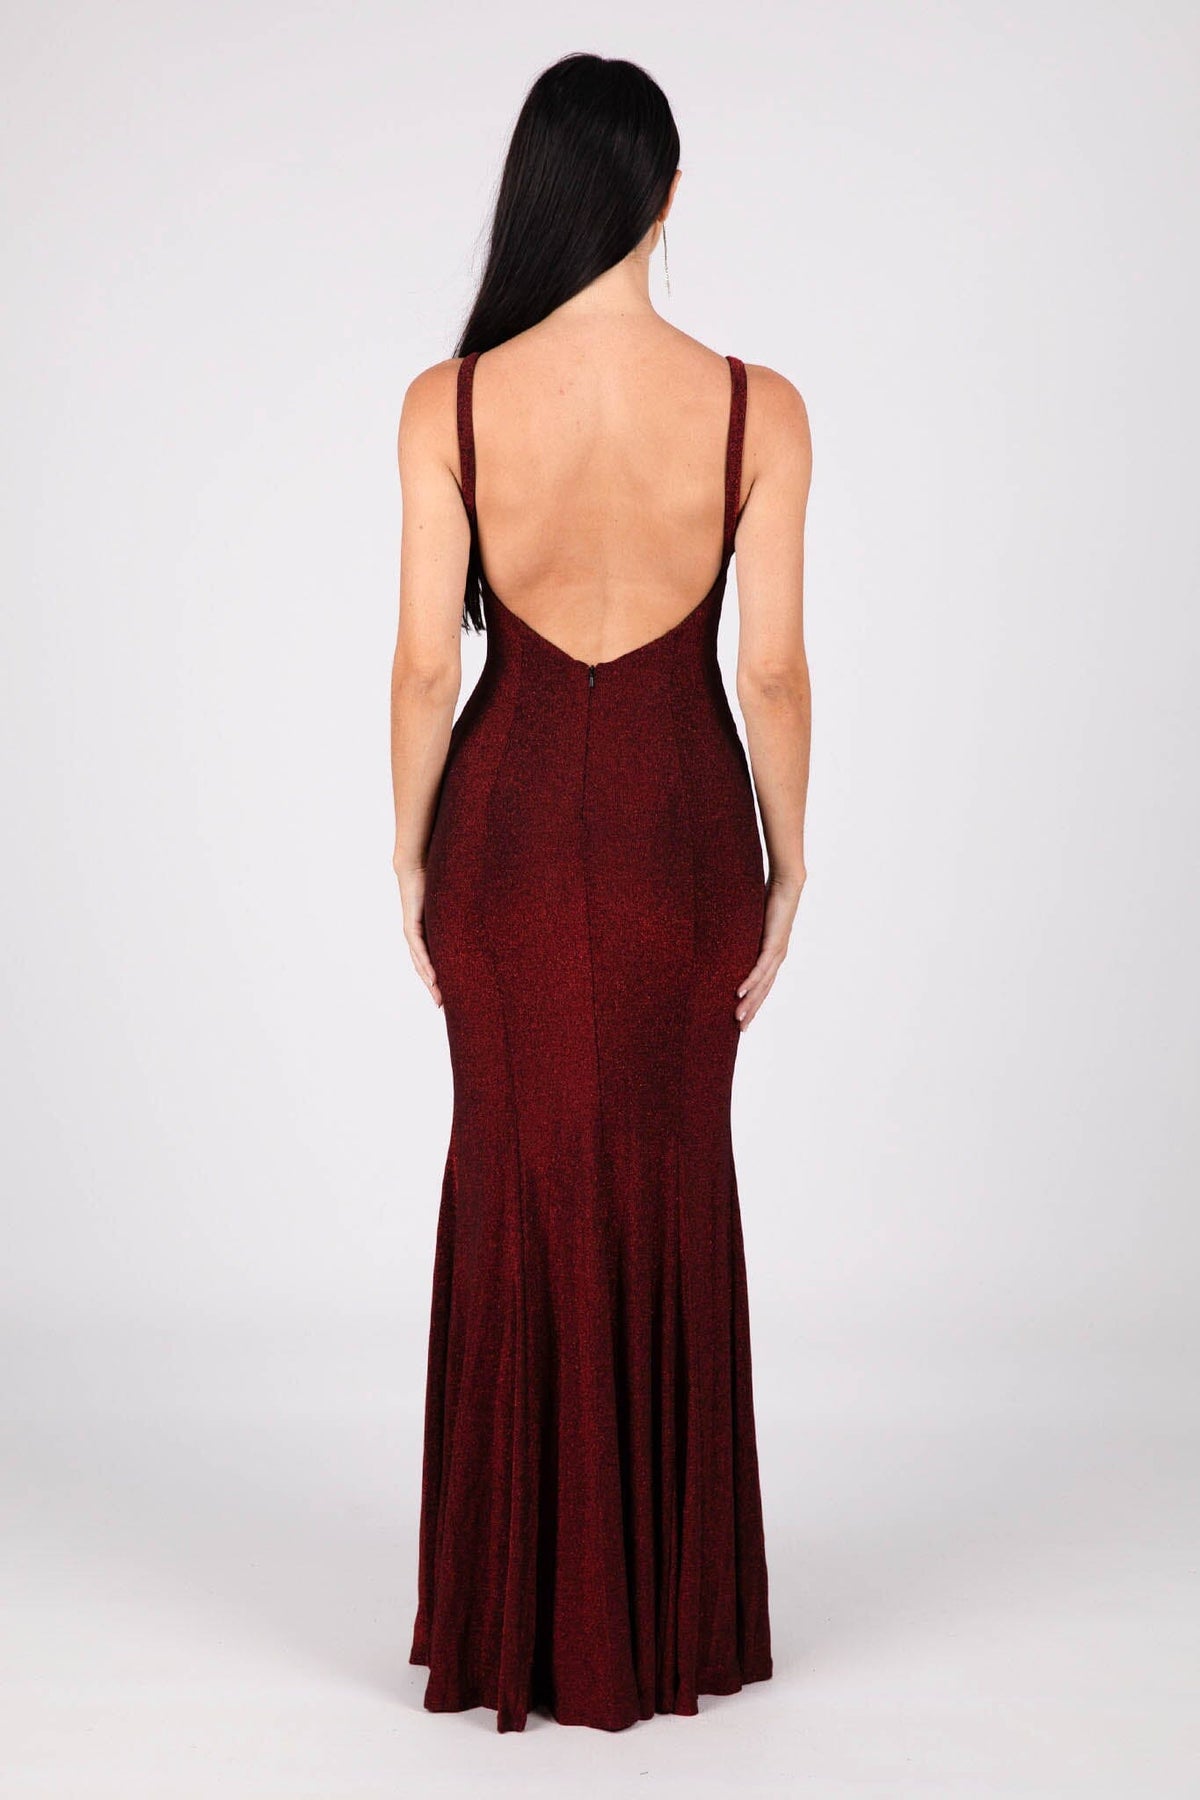 V Backless Design of Shimmer Deep Red Floor Length Fitted Evening Gown with V Neckline